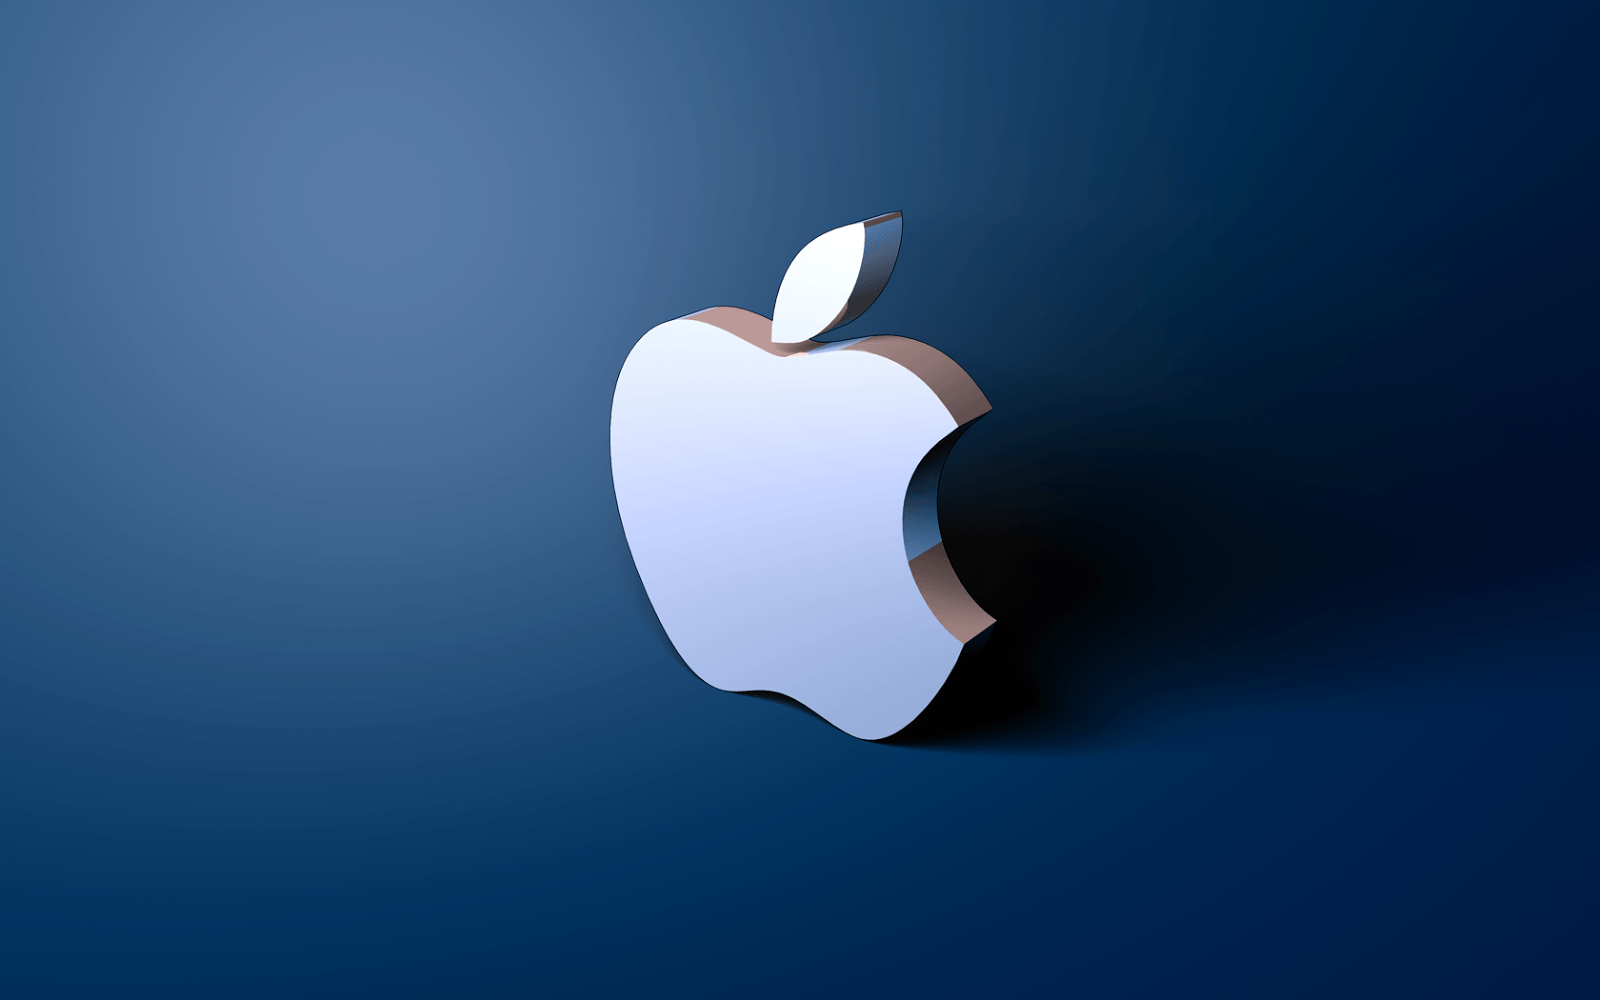 Apple Logo HD Wallpapers 1080p - Wallpaper Cave